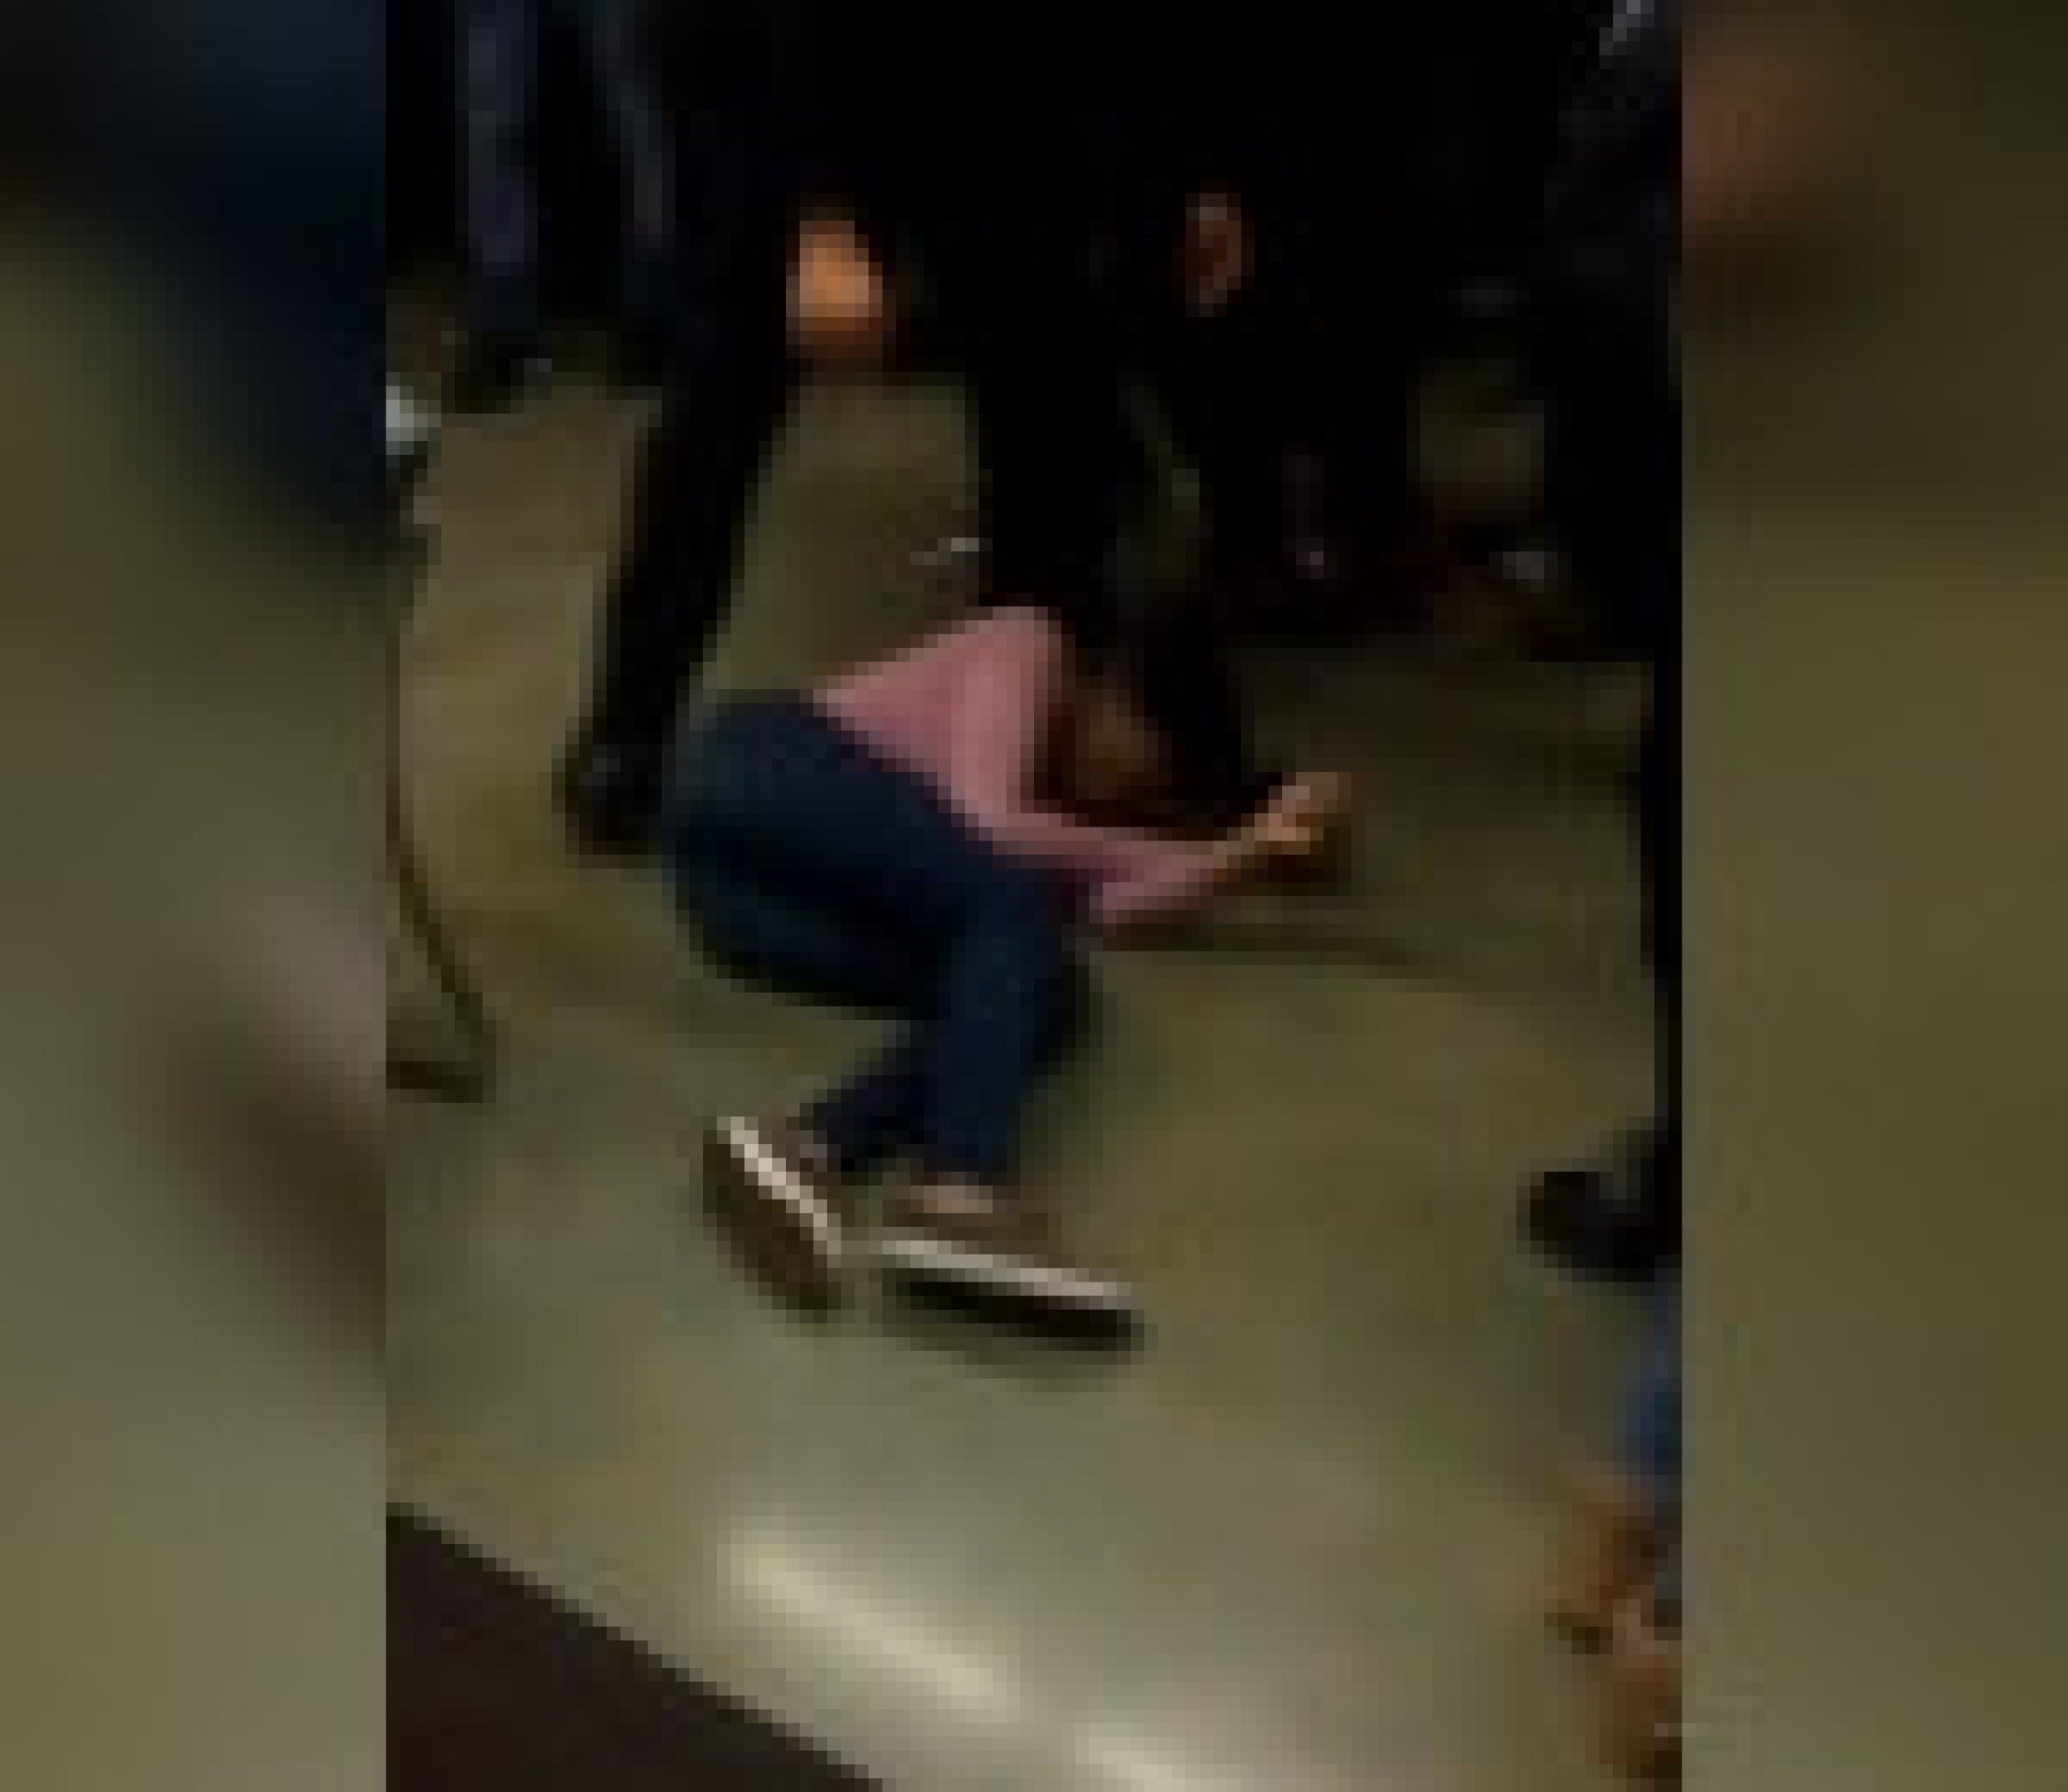 North Carolina police officer slams teen girl to the floor in shocking video